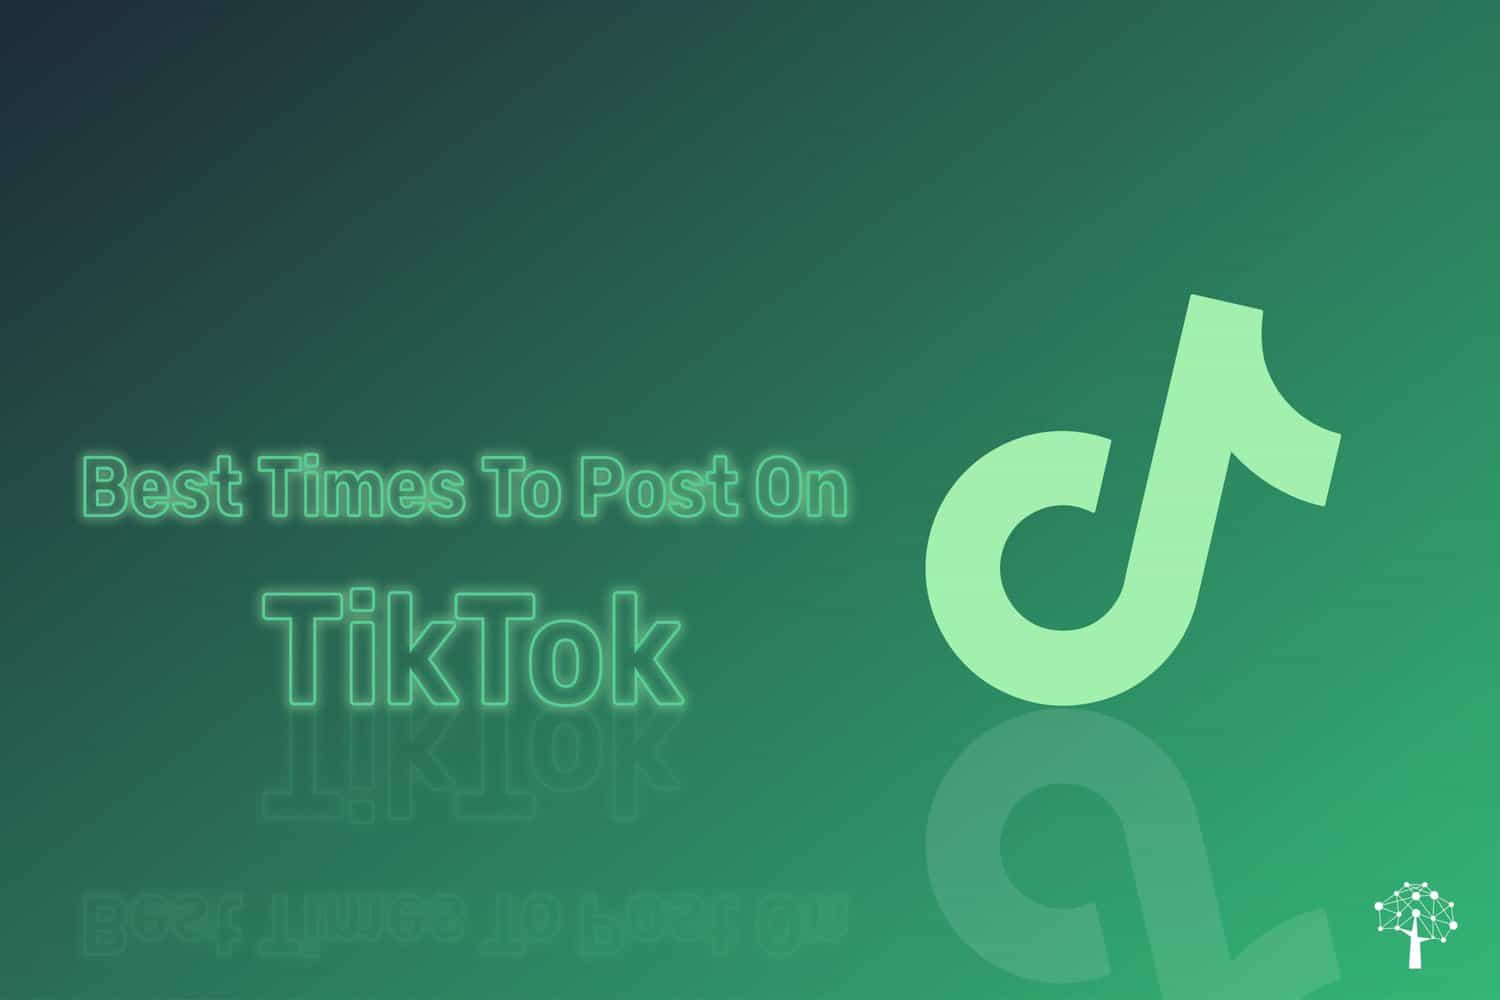 Best Times To Post On TikTok